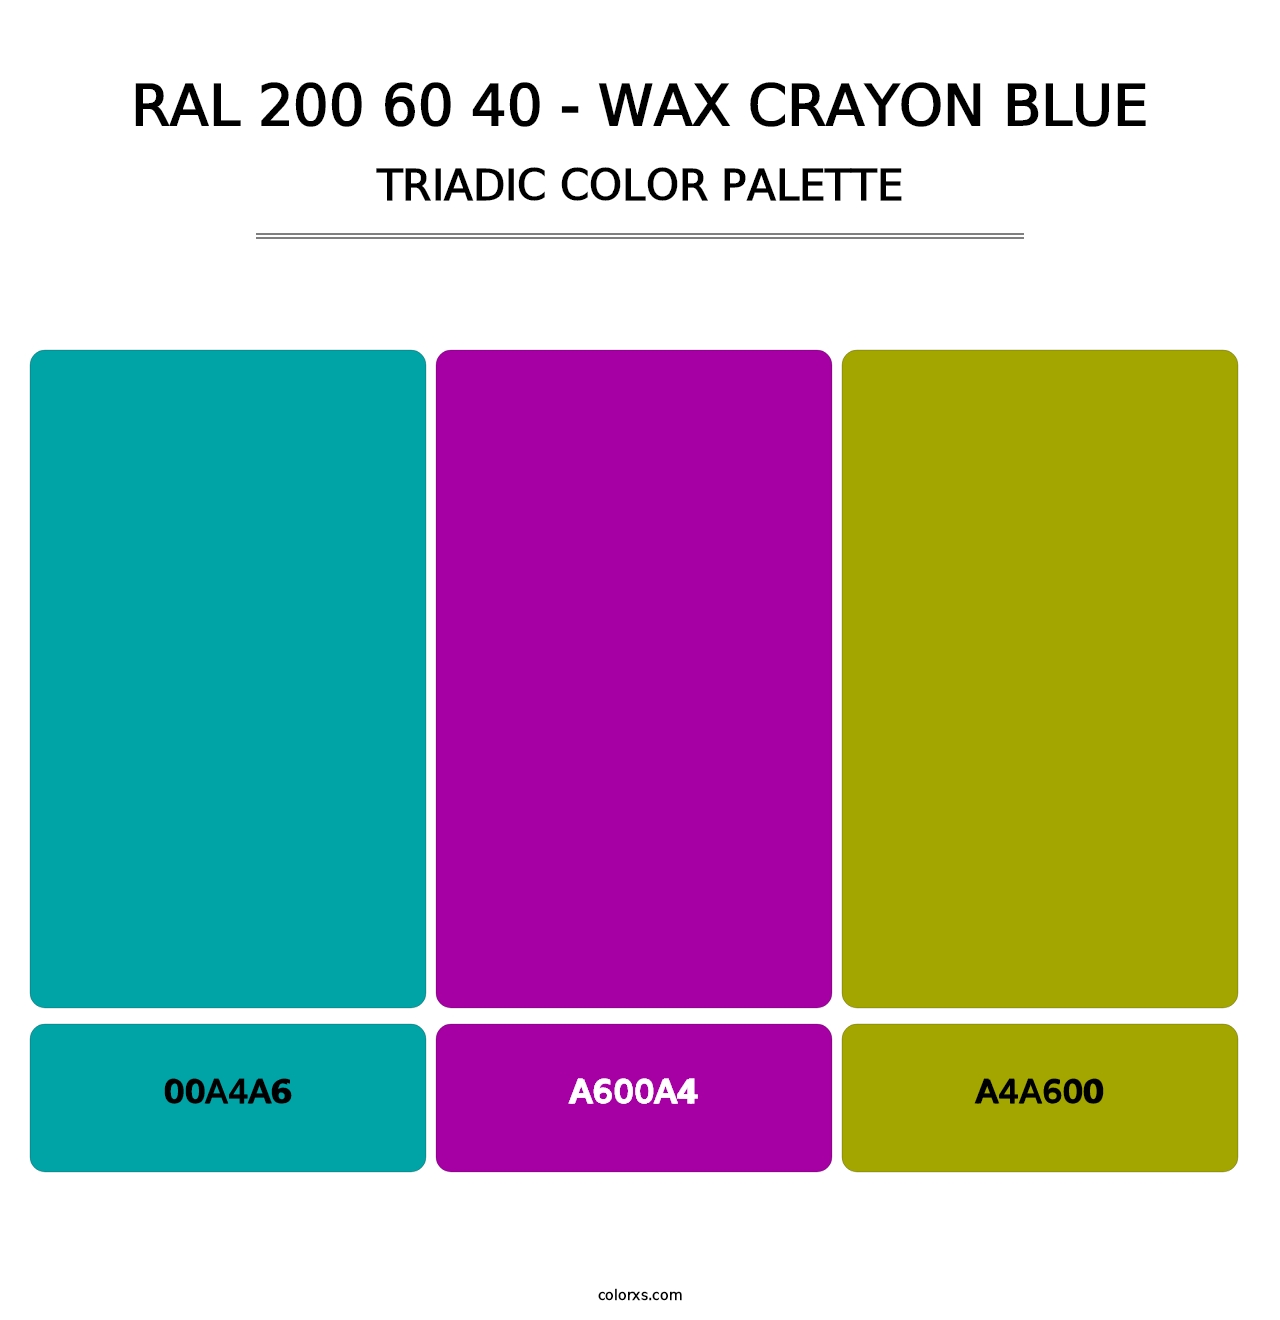 RAL 200 60 40 - Wax Crayon Blue - Triadic Color Palette